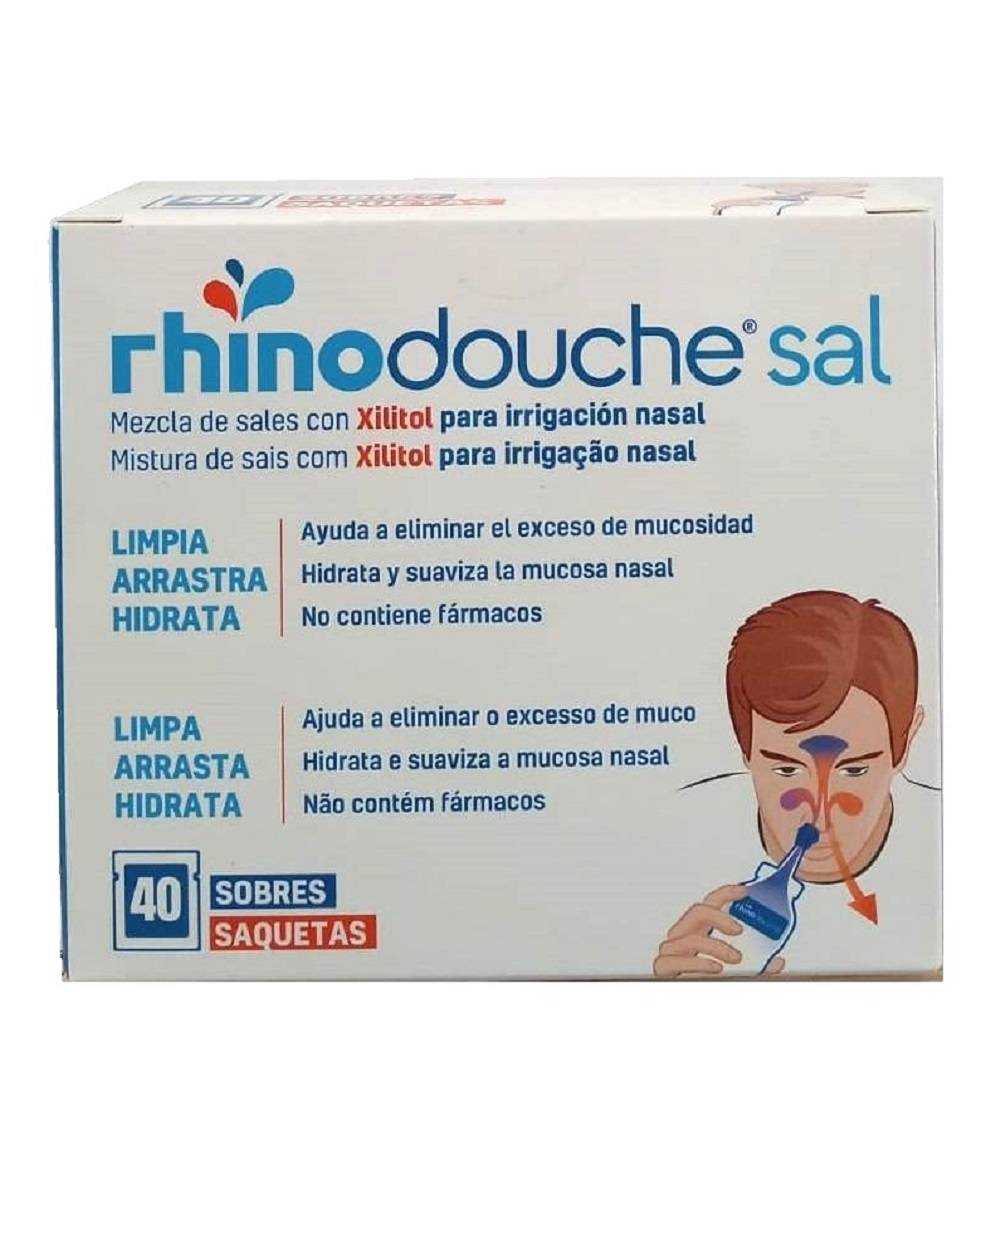 RHINODOUCHE SAL 40 SOBRES 5 g - Farmacia Angulo Arce